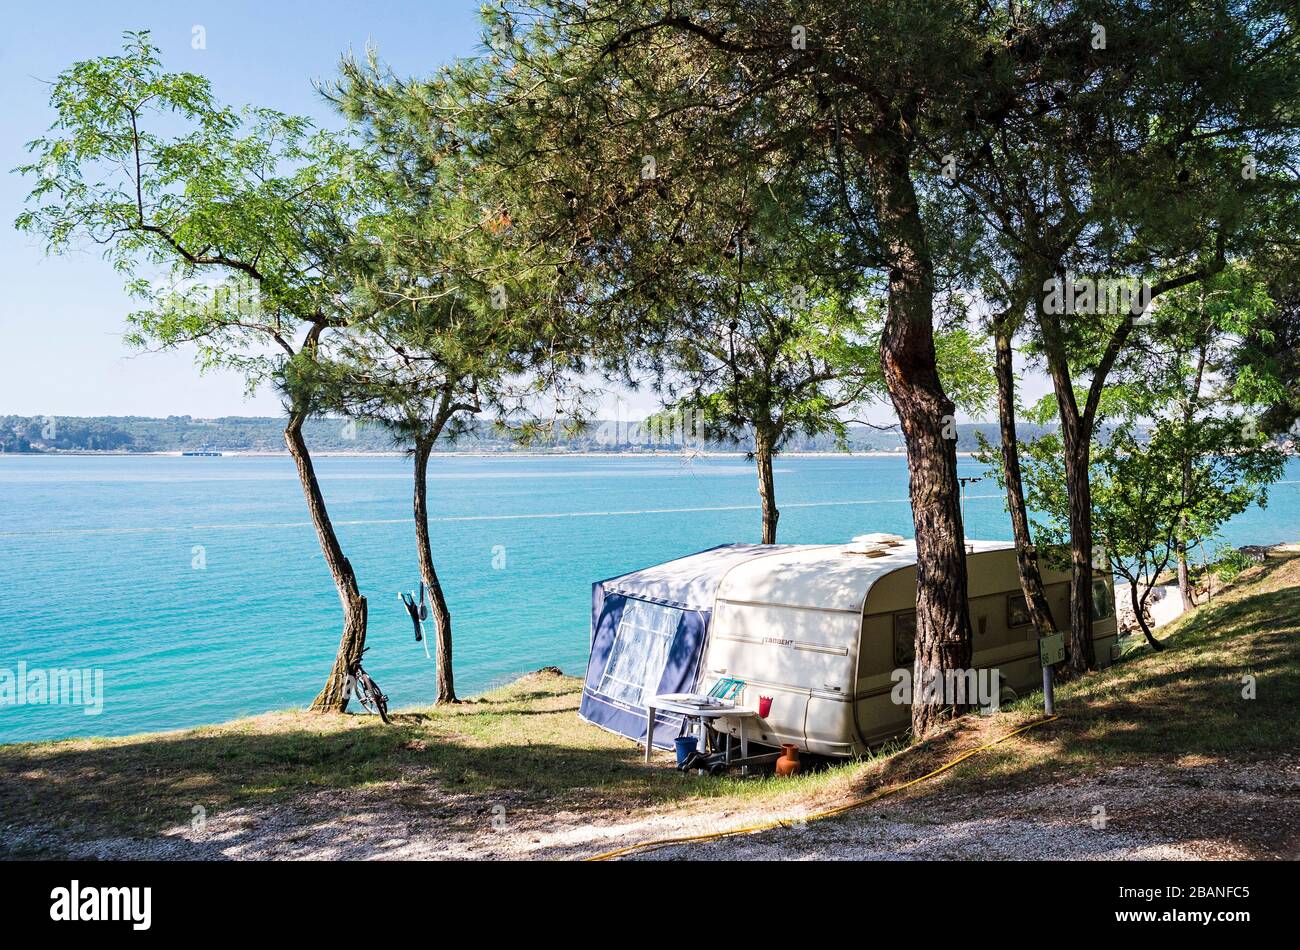 Caravana en un camping junto al mar Foto de stock